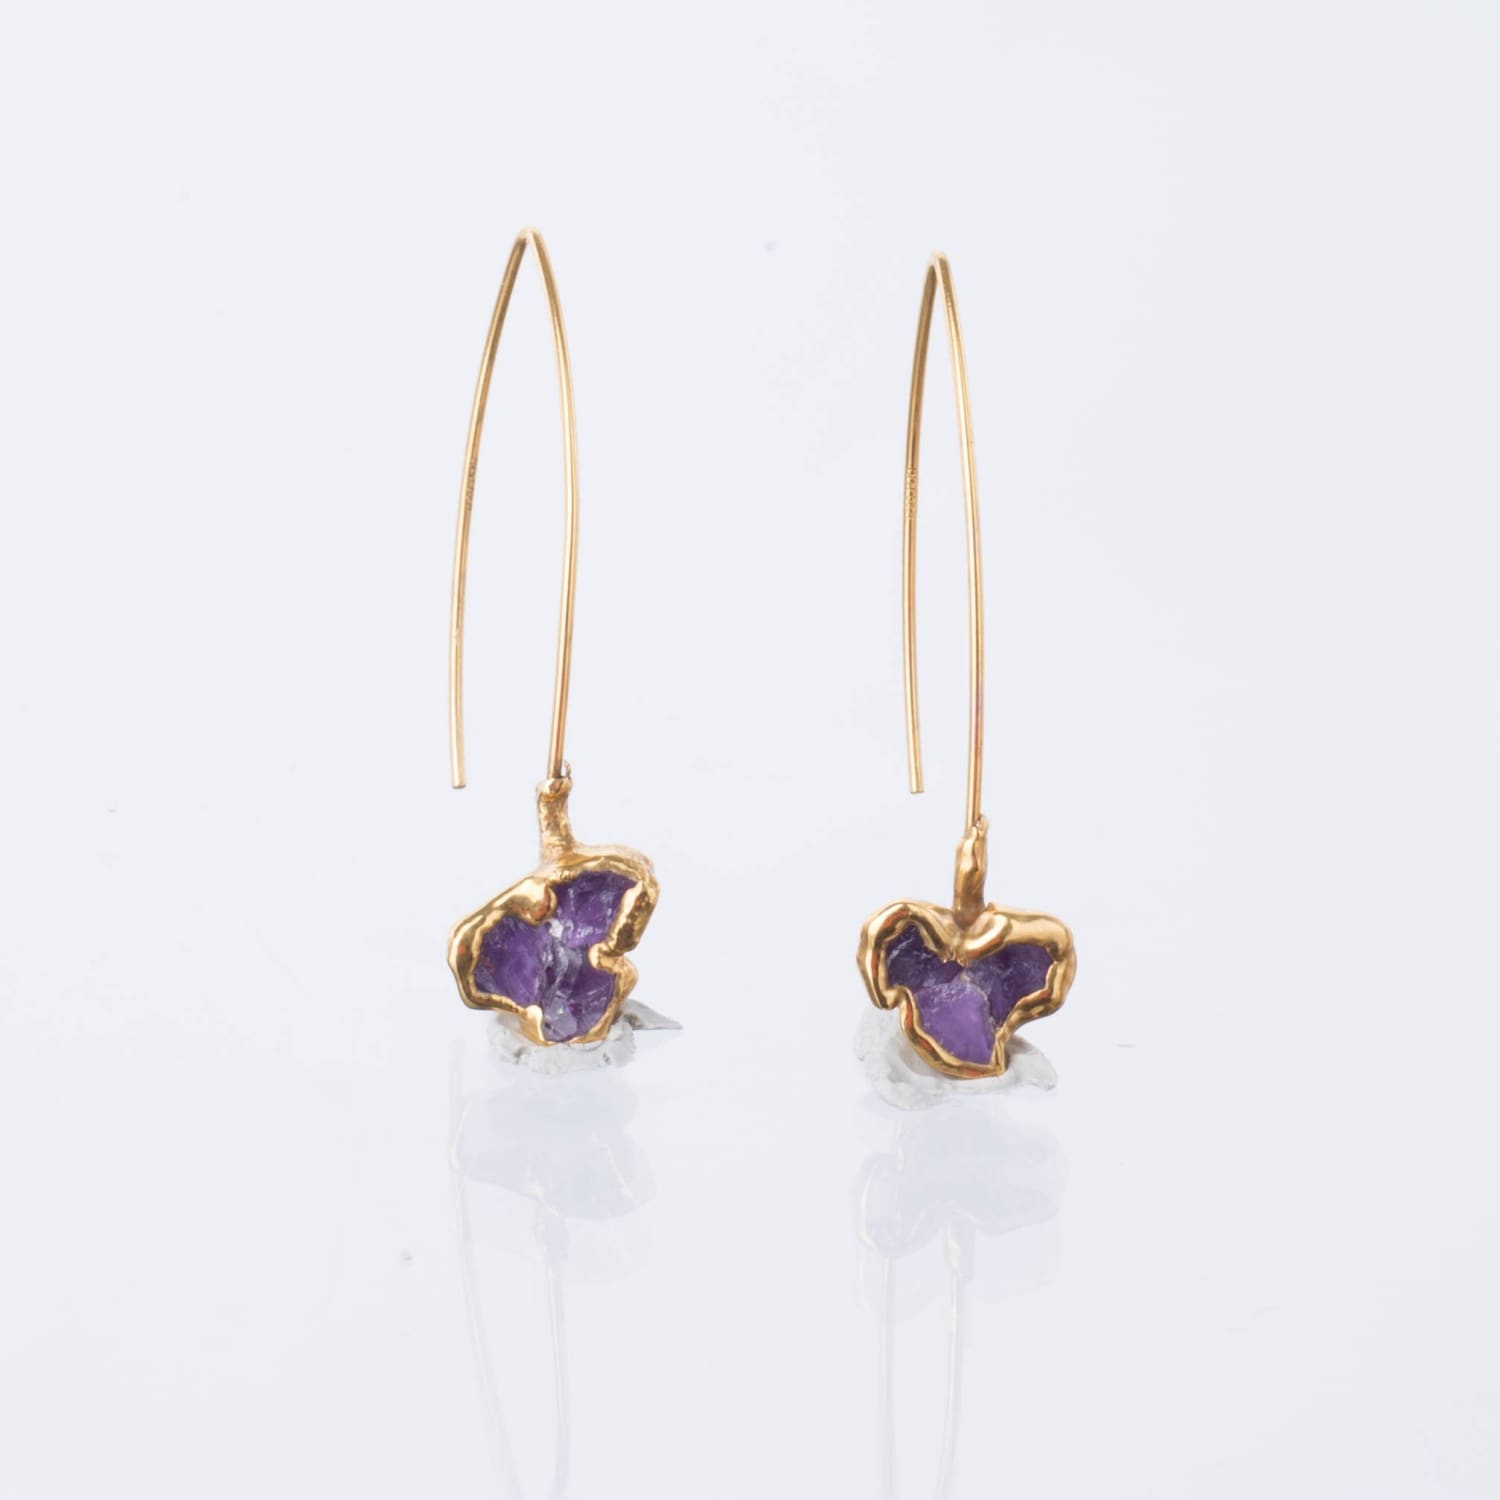 Edgy Fleur Raw Amethyst Cluster Drop Earrings Gemstone